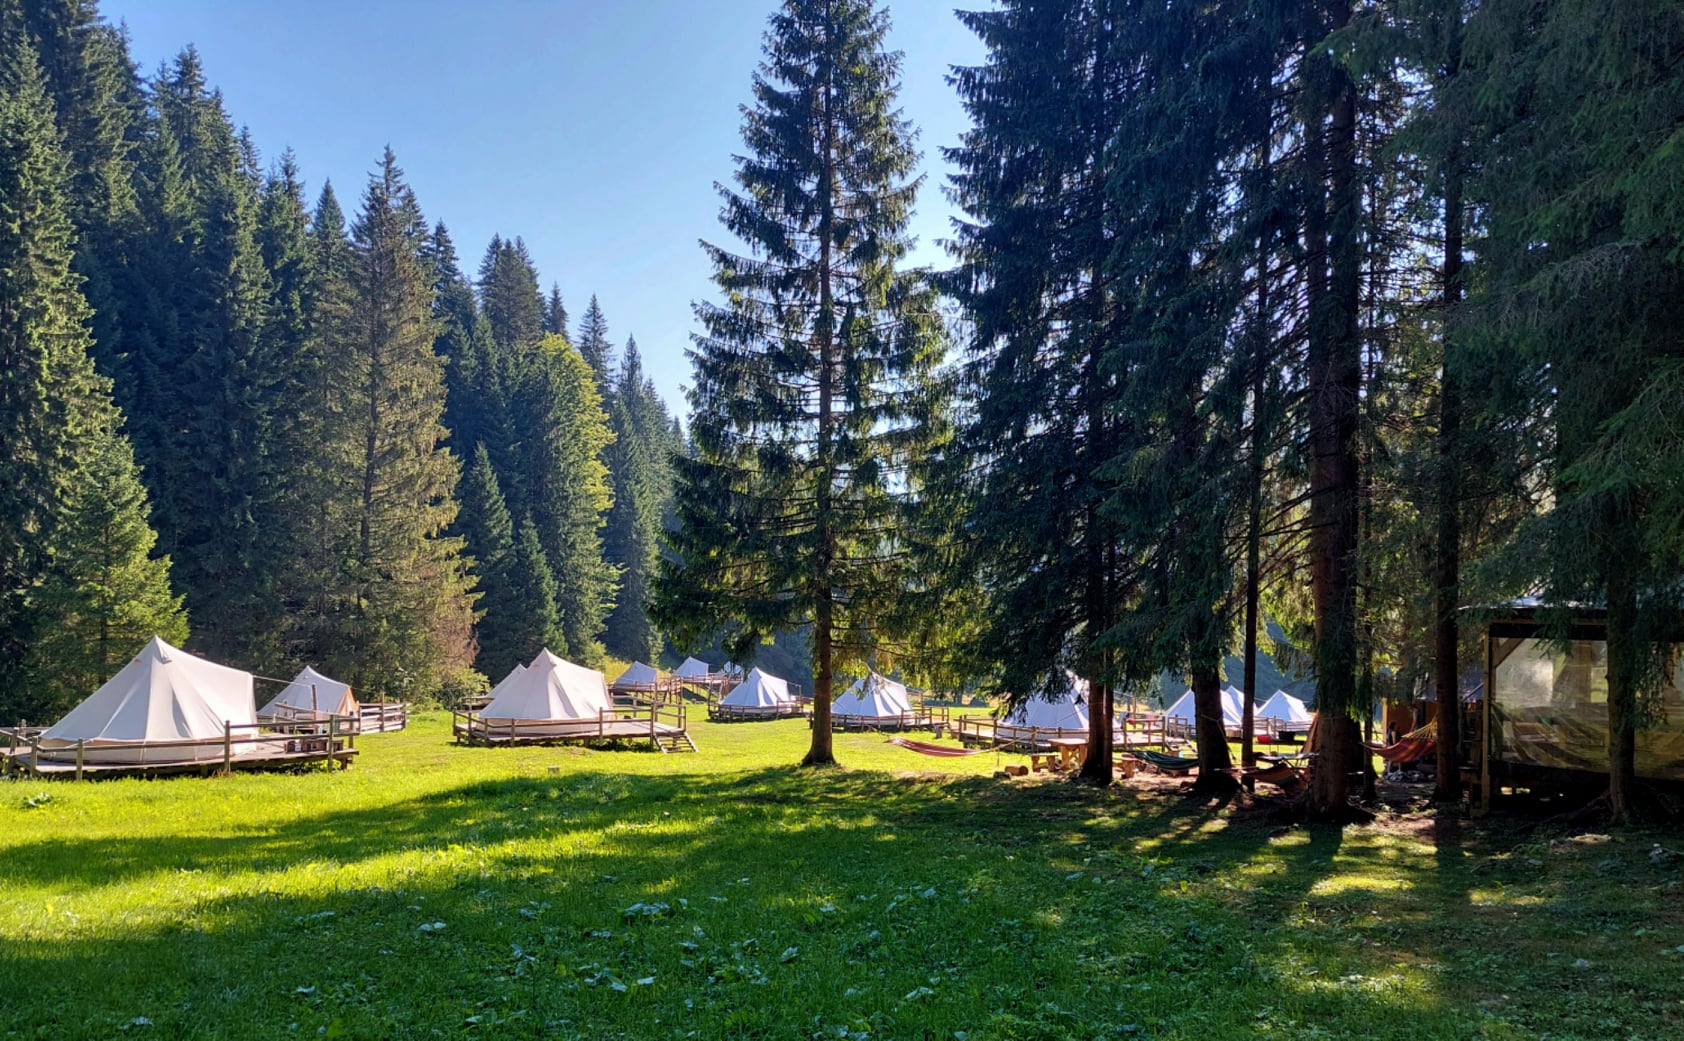  Camping Glamping Valea Iarului - Sima Constantin